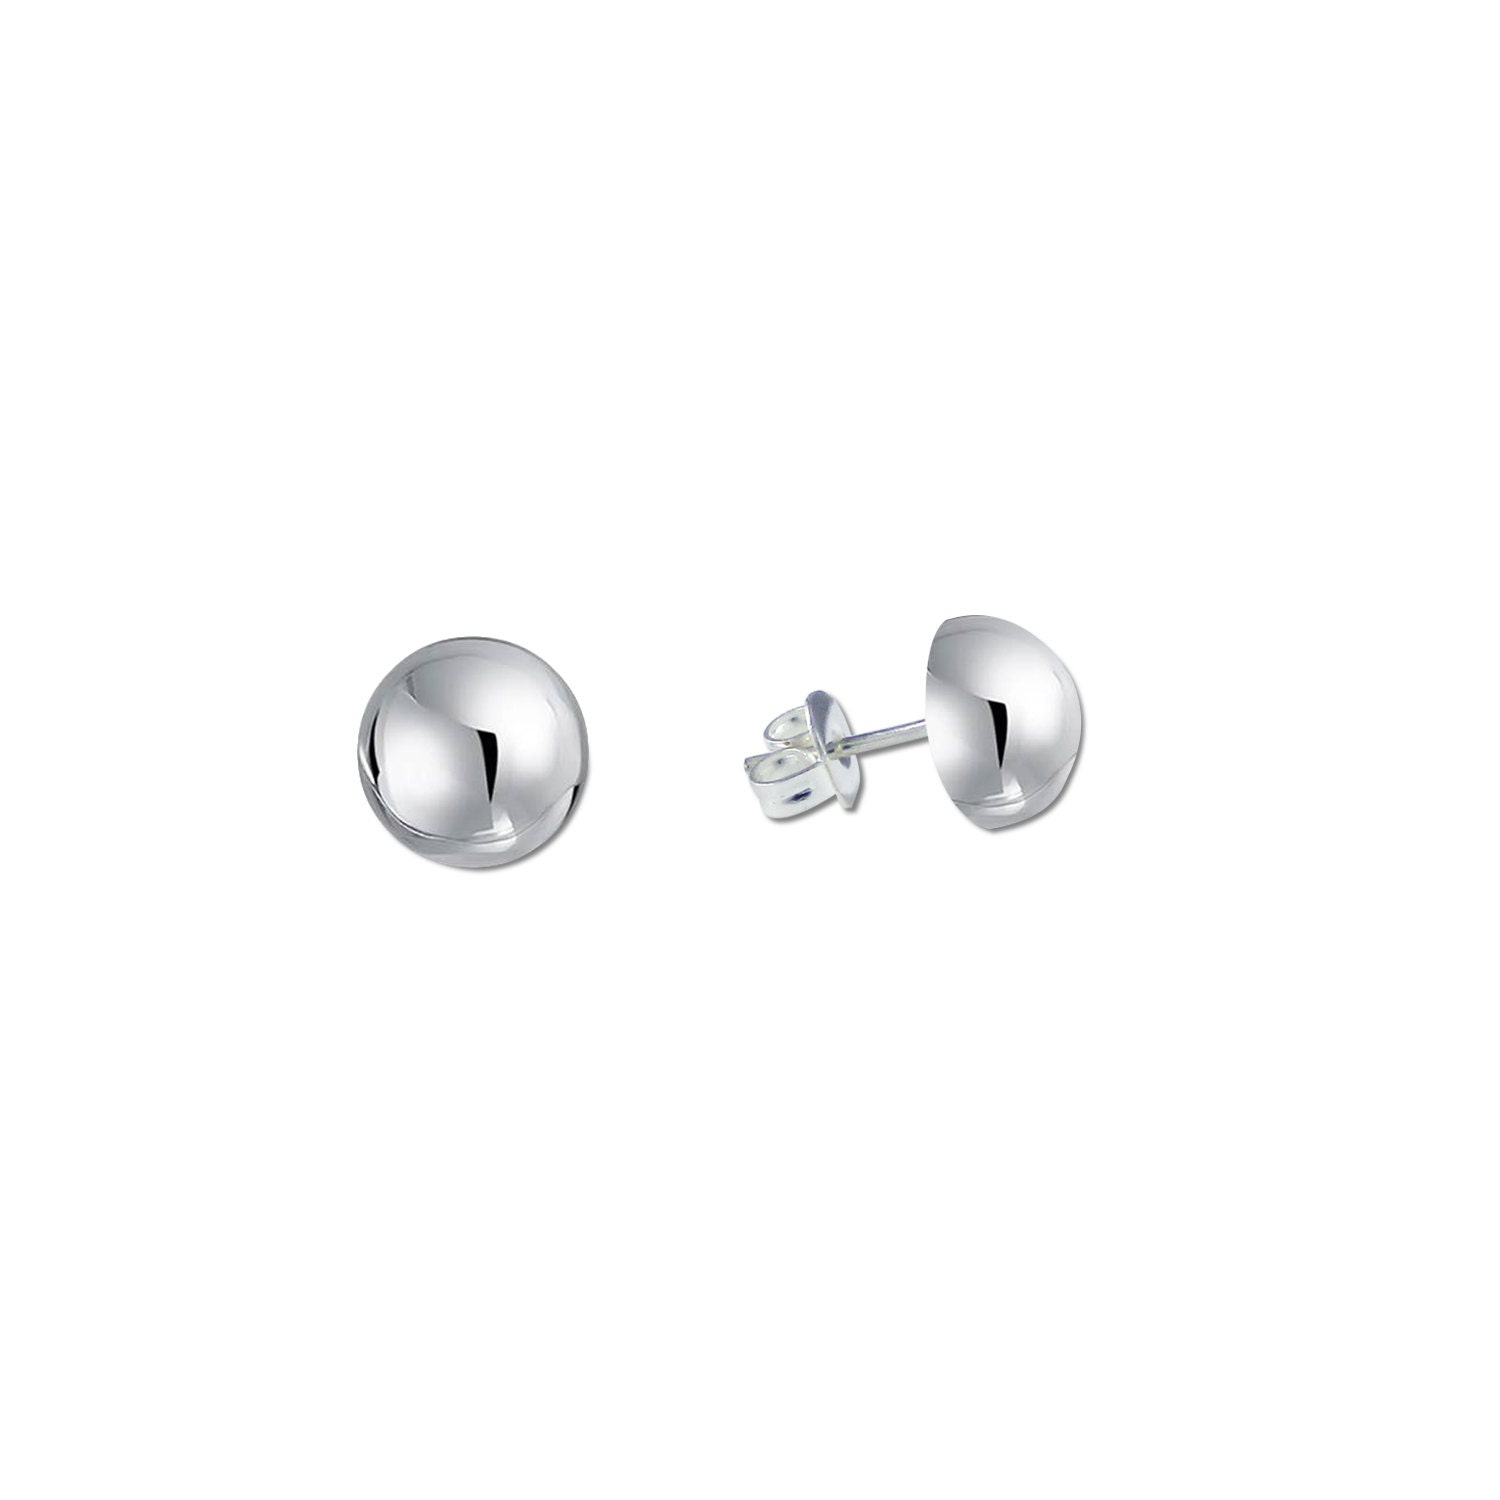 100pcs 4.5X6mm Earring Backs Stainless Steel Earring Backings for Studs  Hypoallergenic Surgical Locking Earring Backs for Posts